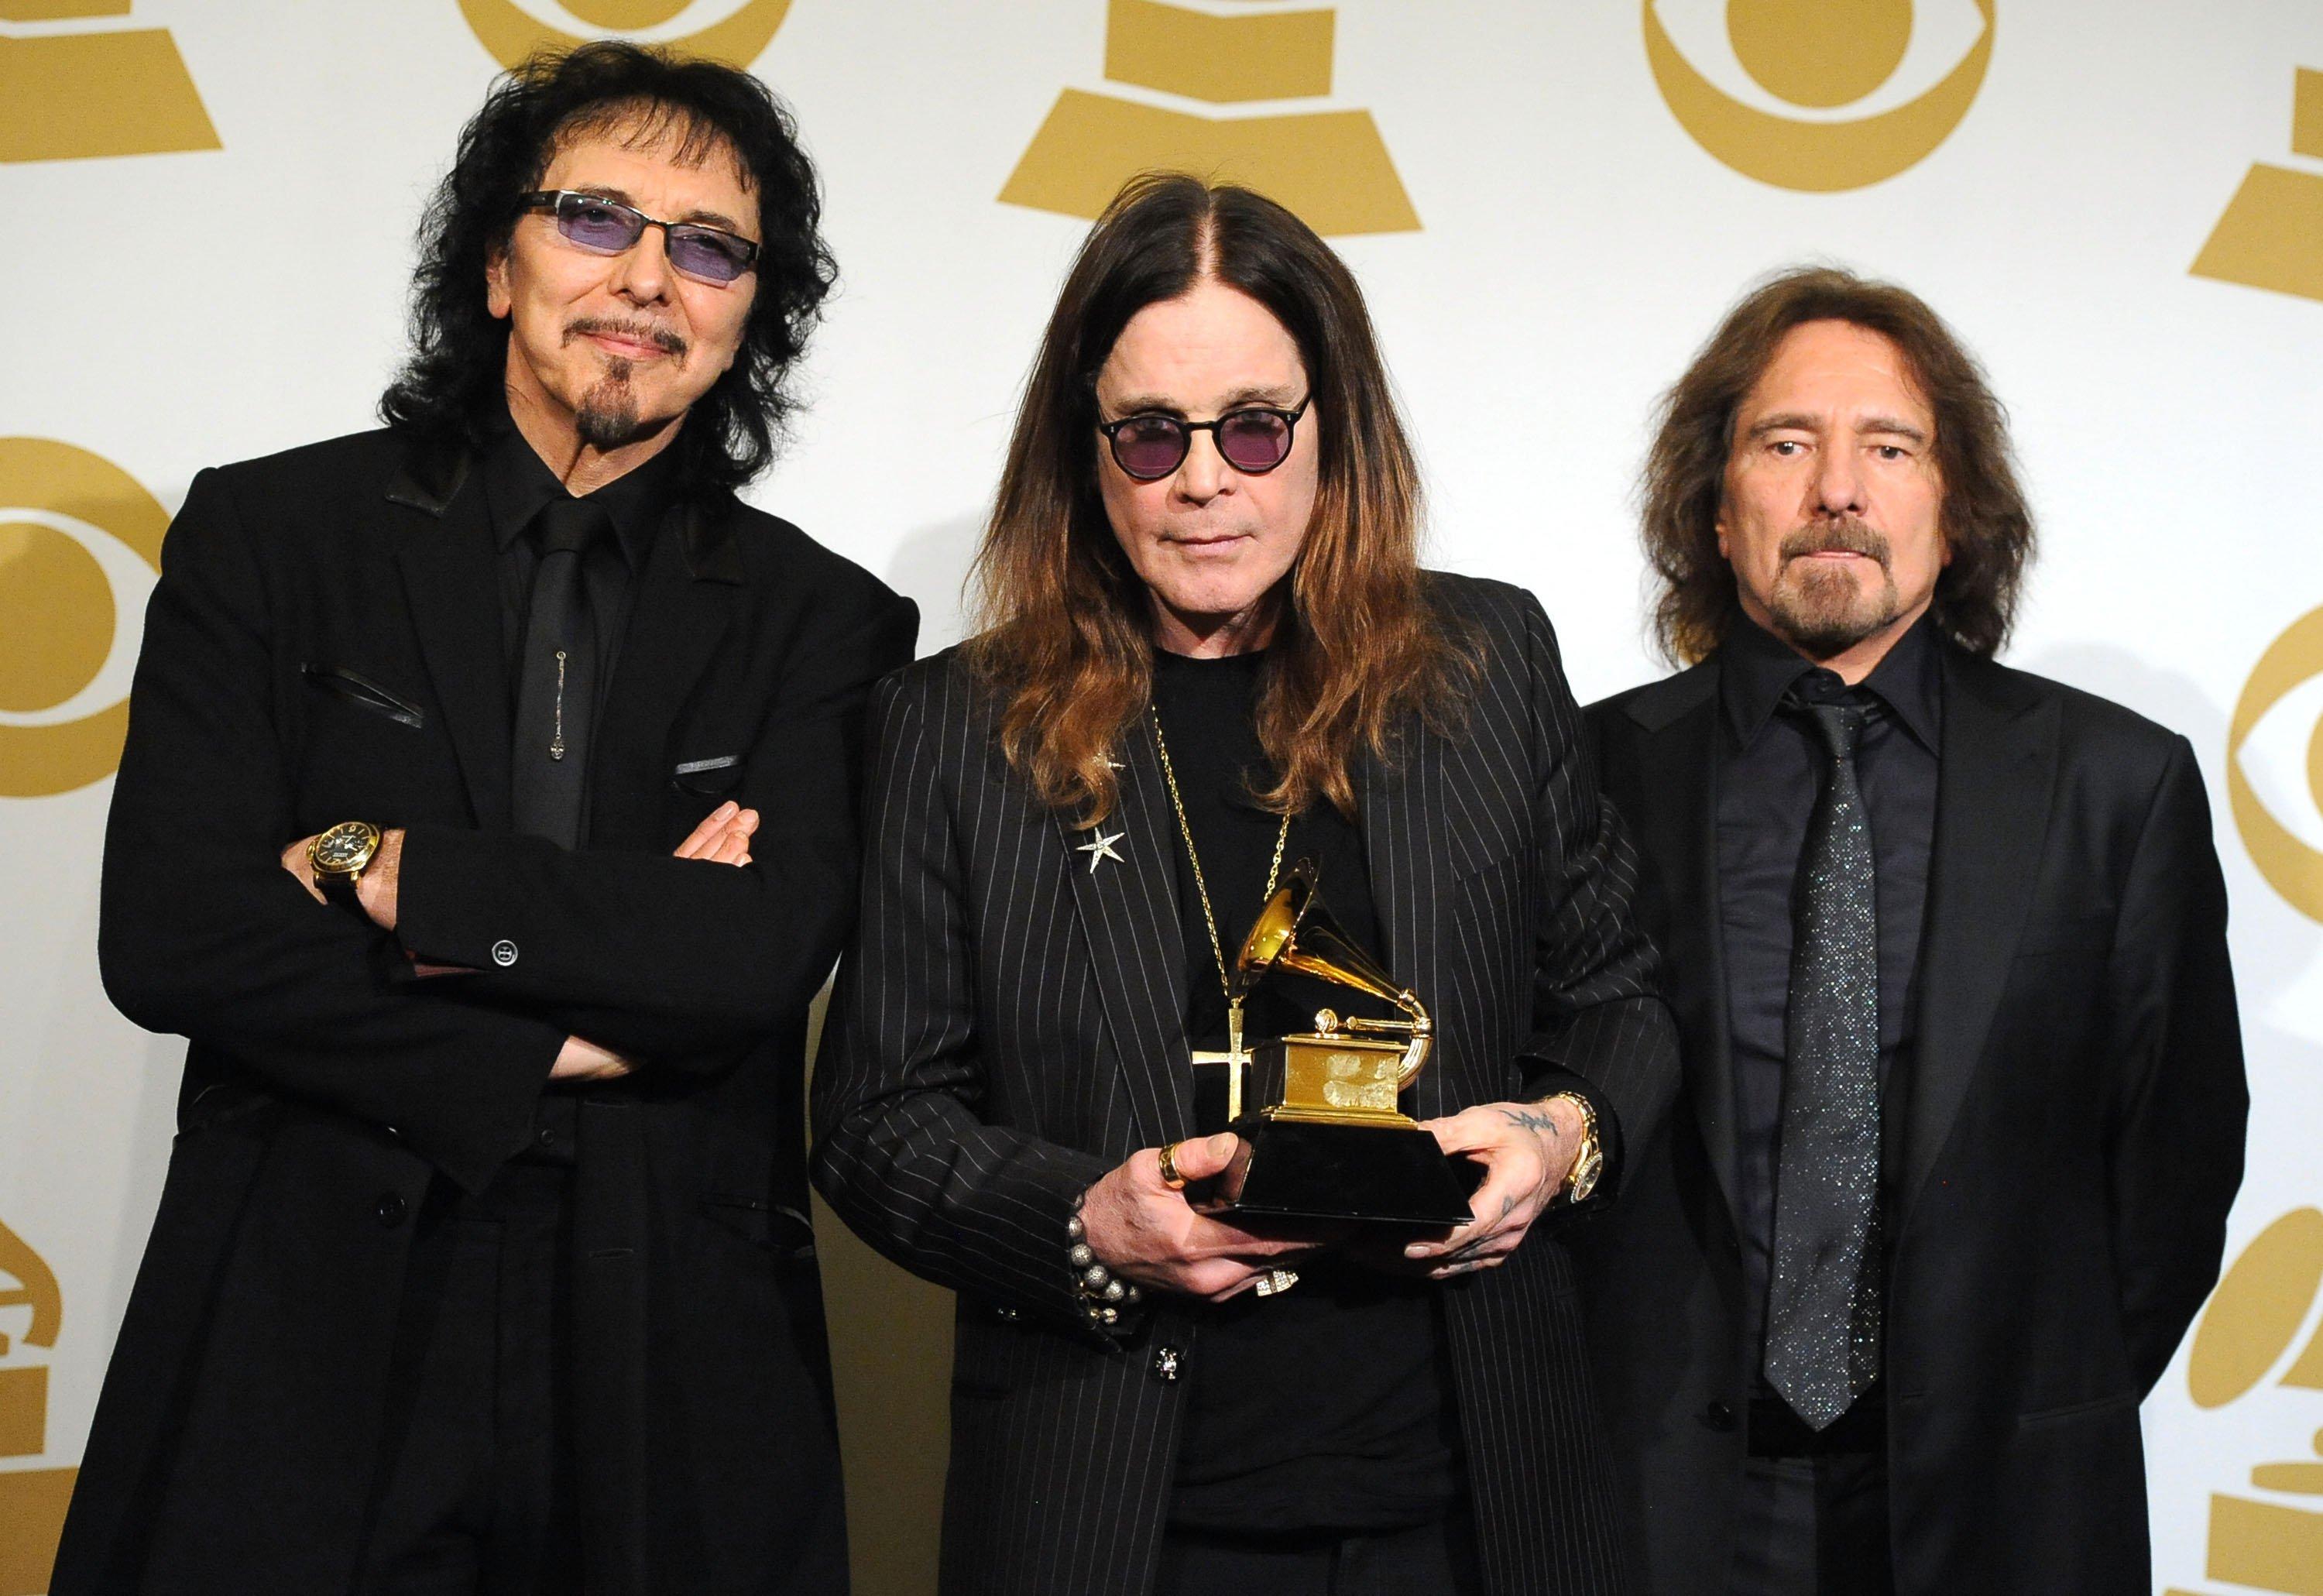 Black Sabbath at the 56th GRAMMY Awards in 2014